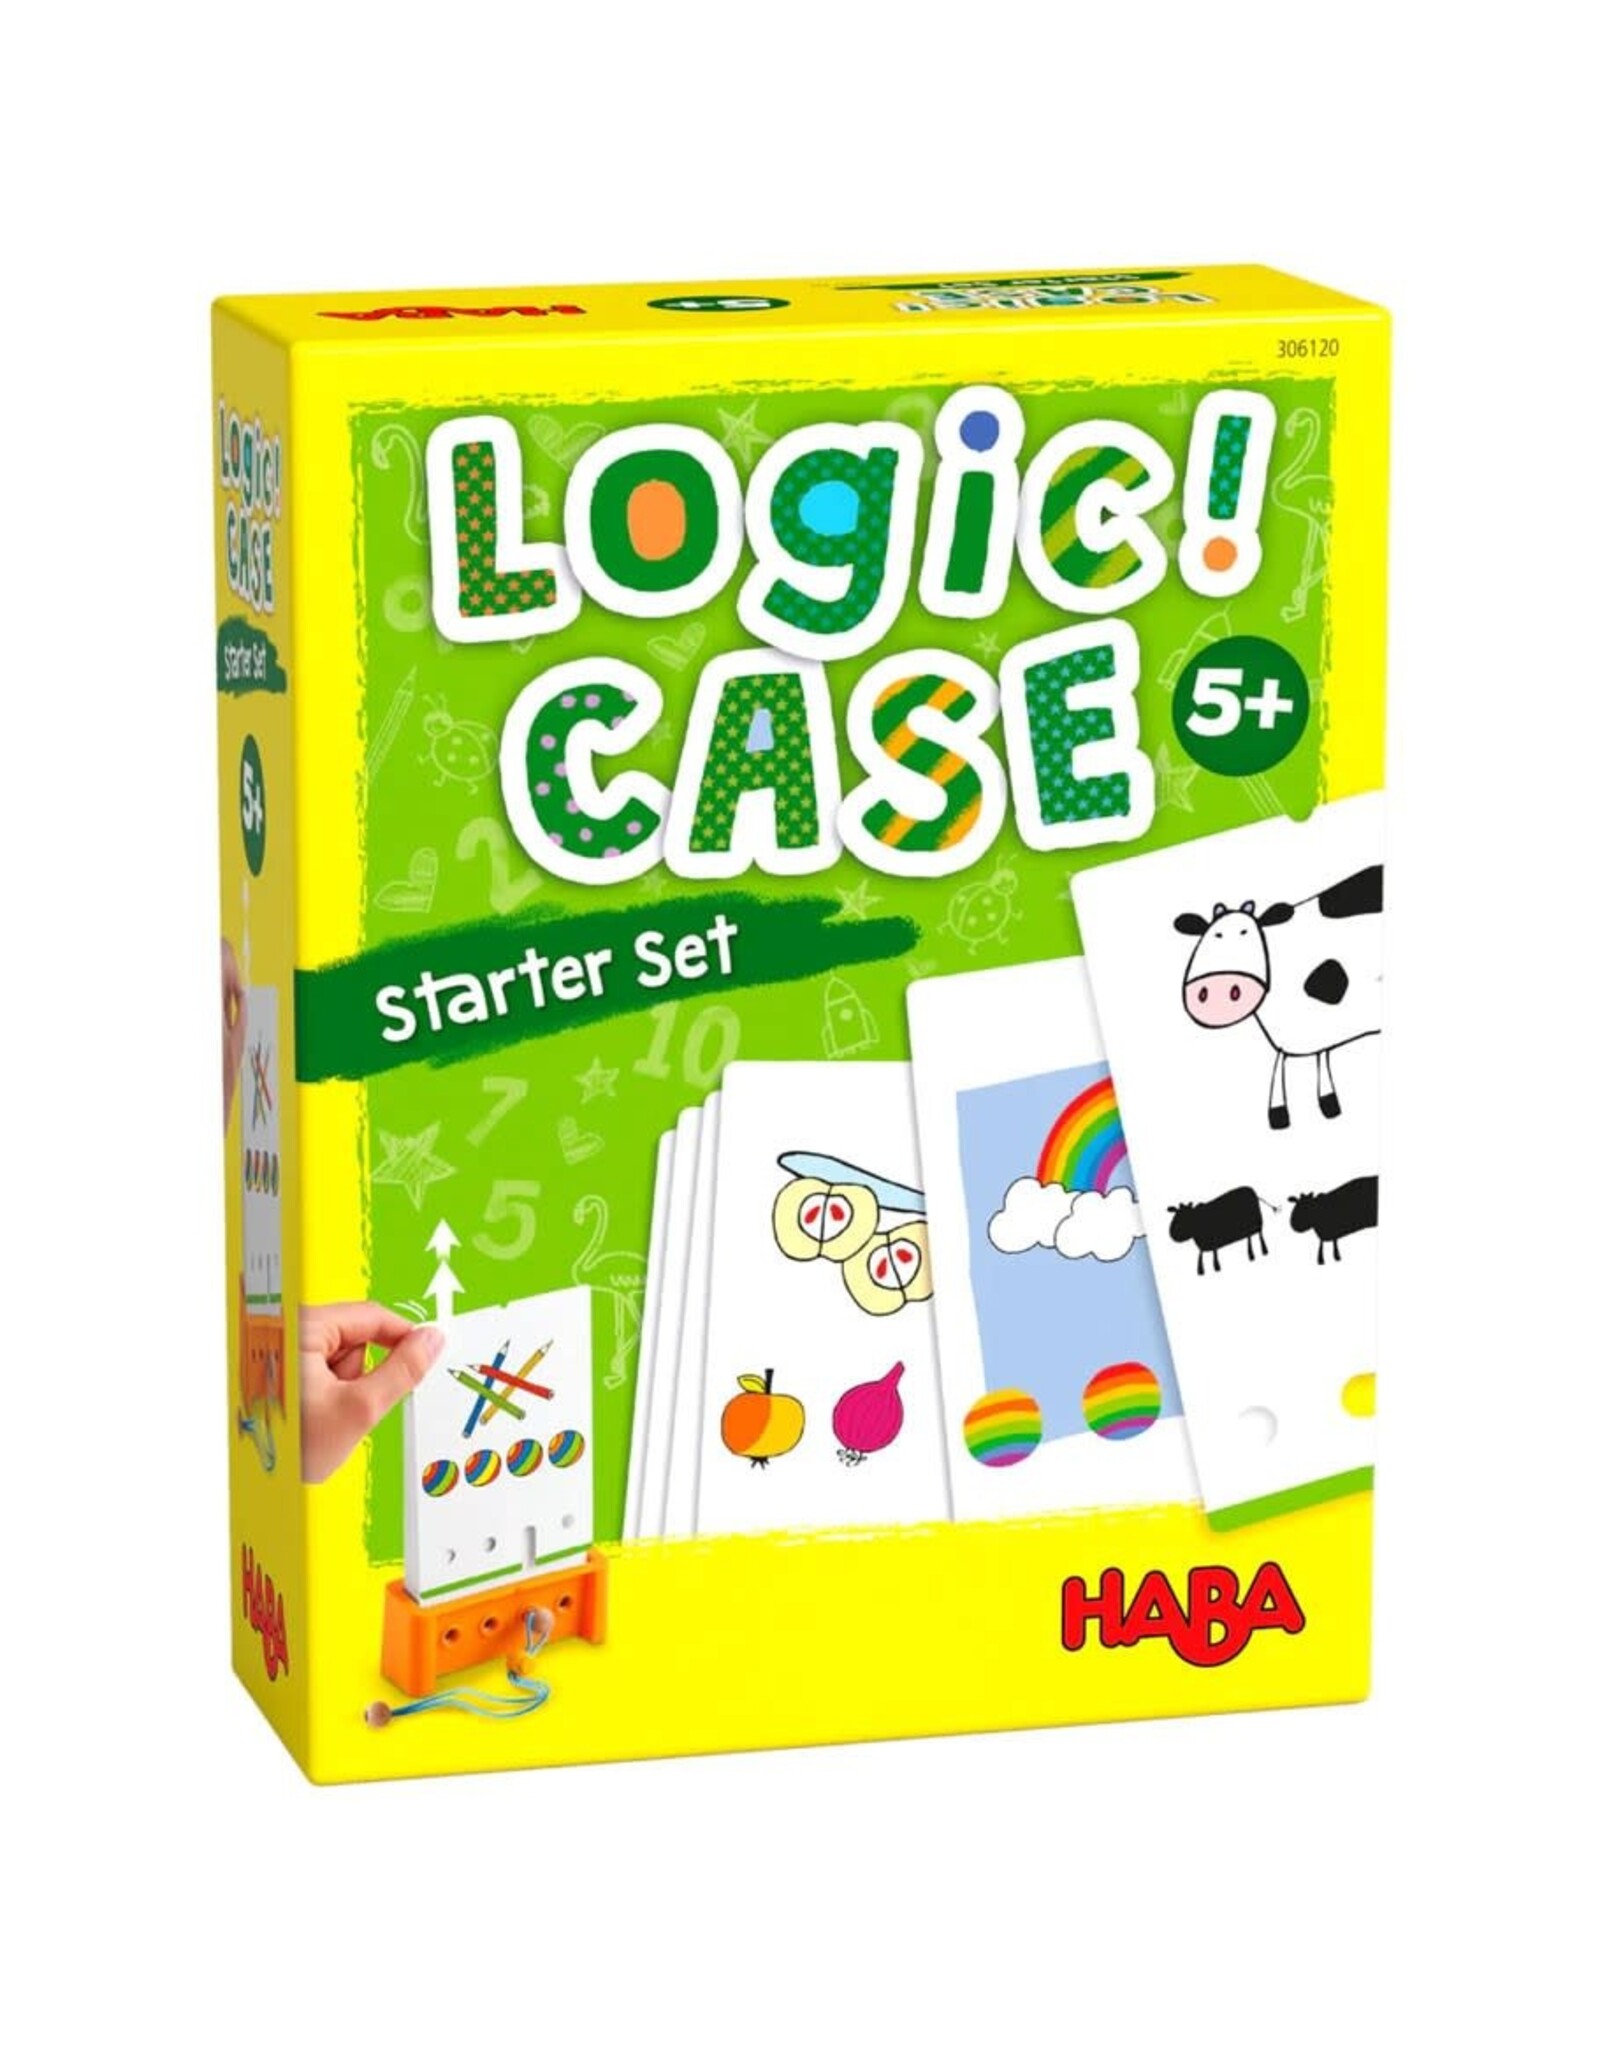 HABA Logic! CASE: Starter Set 5+